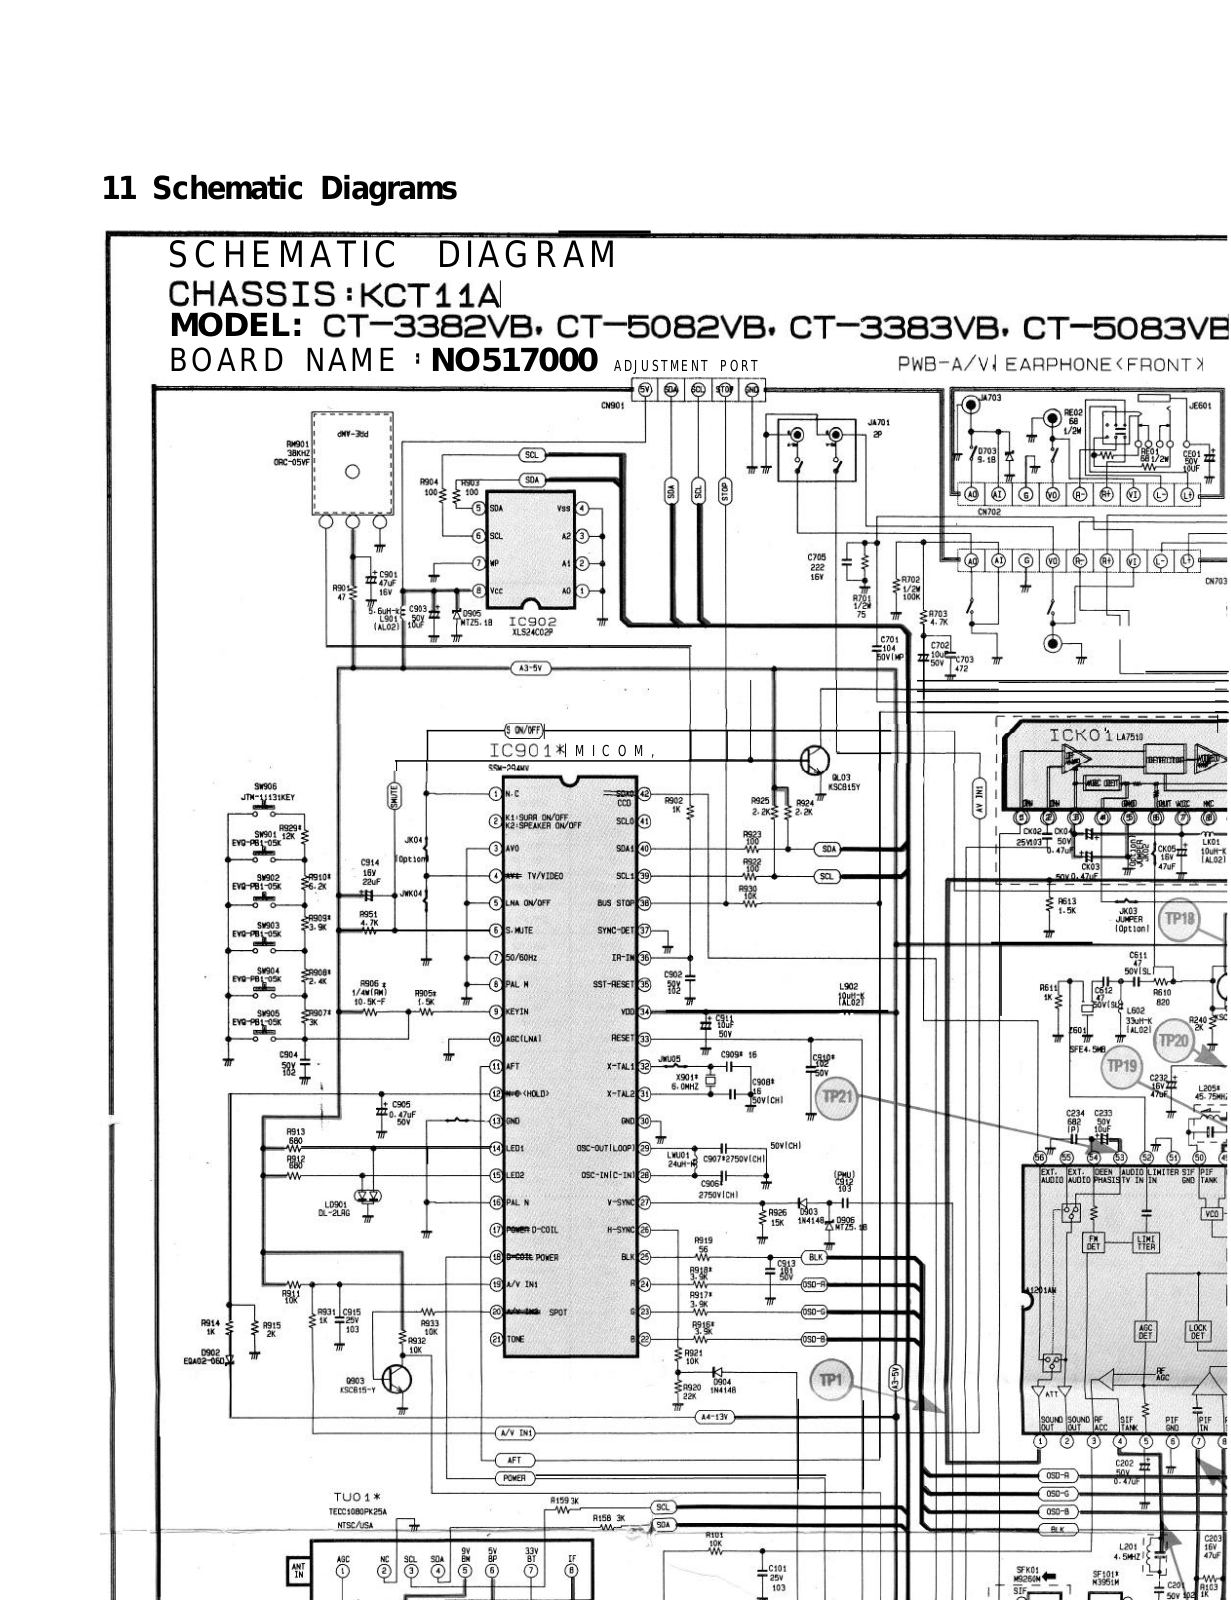 SAMSUNG CT-5082VB, CT-3383VB, CT-5083VB Service Manual